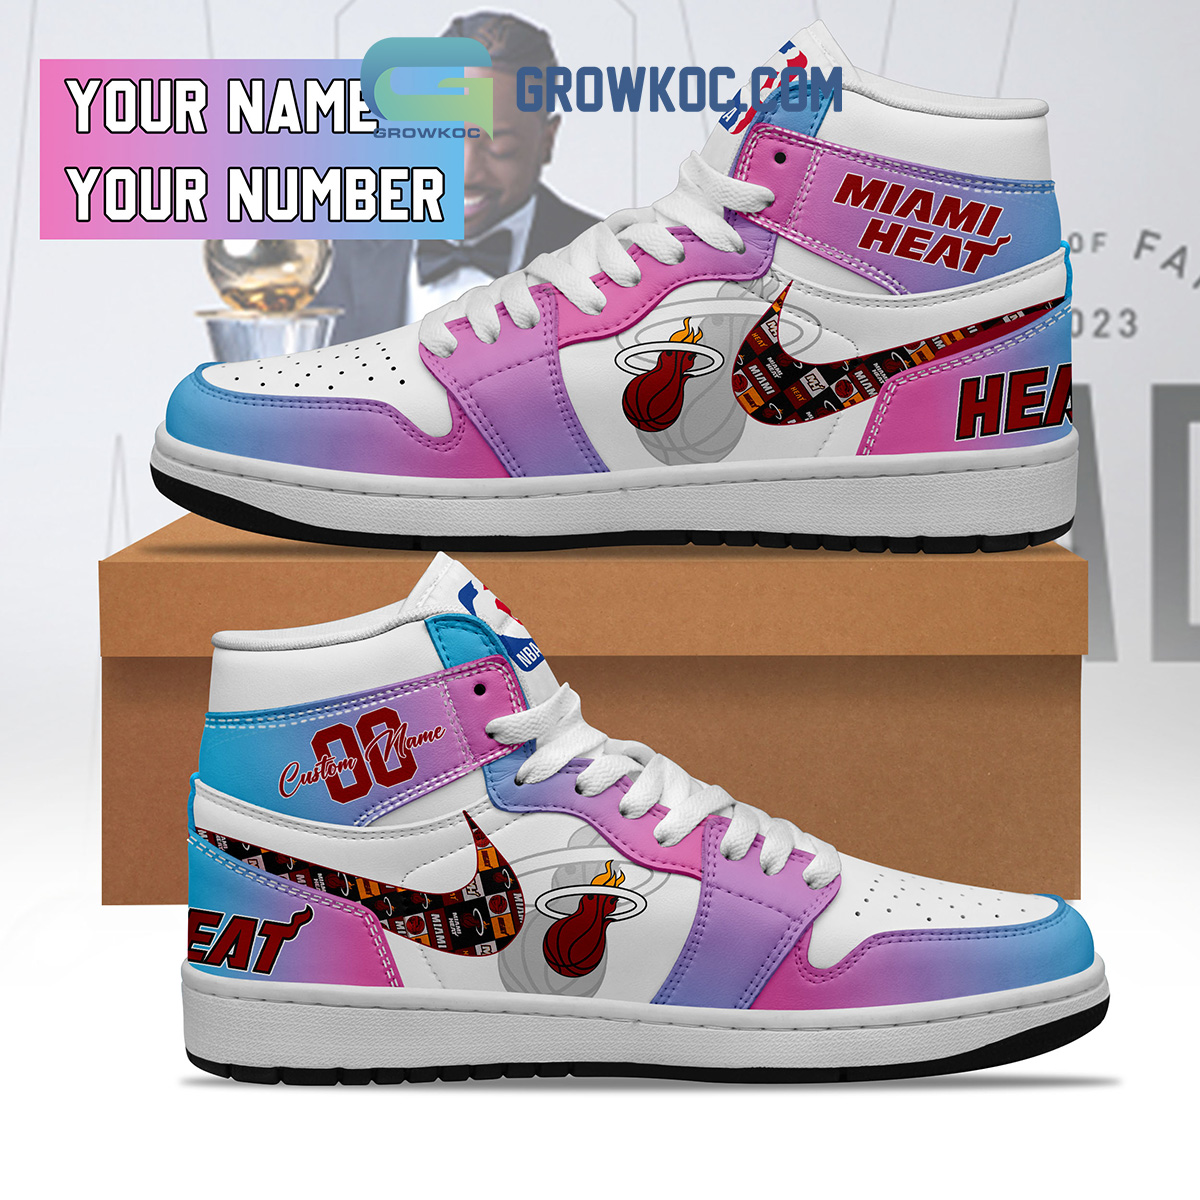 Miami Heat NBA Personalized Air Jordan 1 Shoes - Growkoc